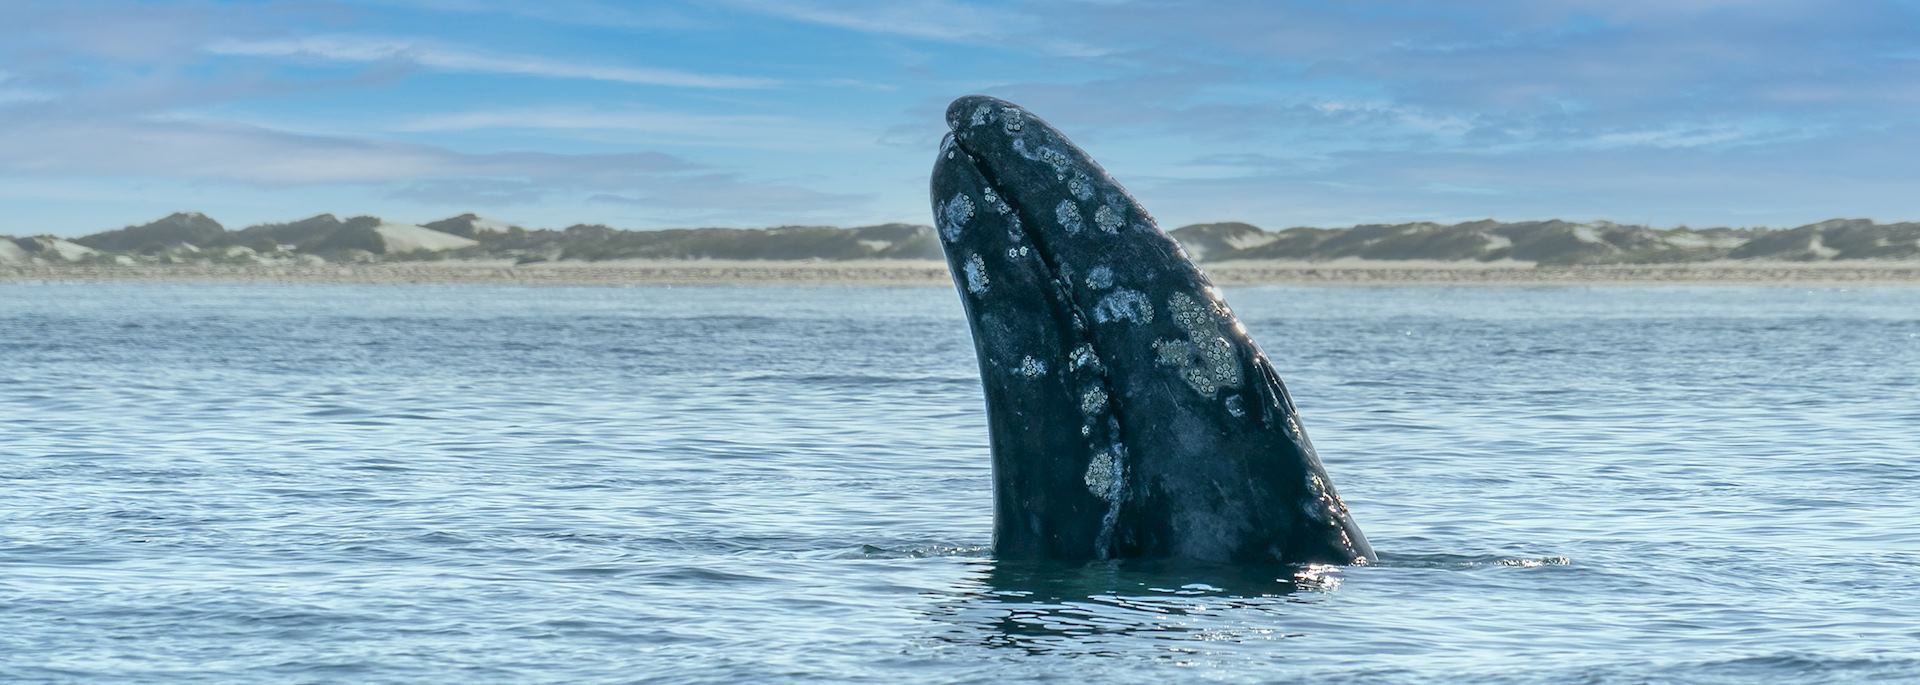 Grey whale, Magdalena Bay